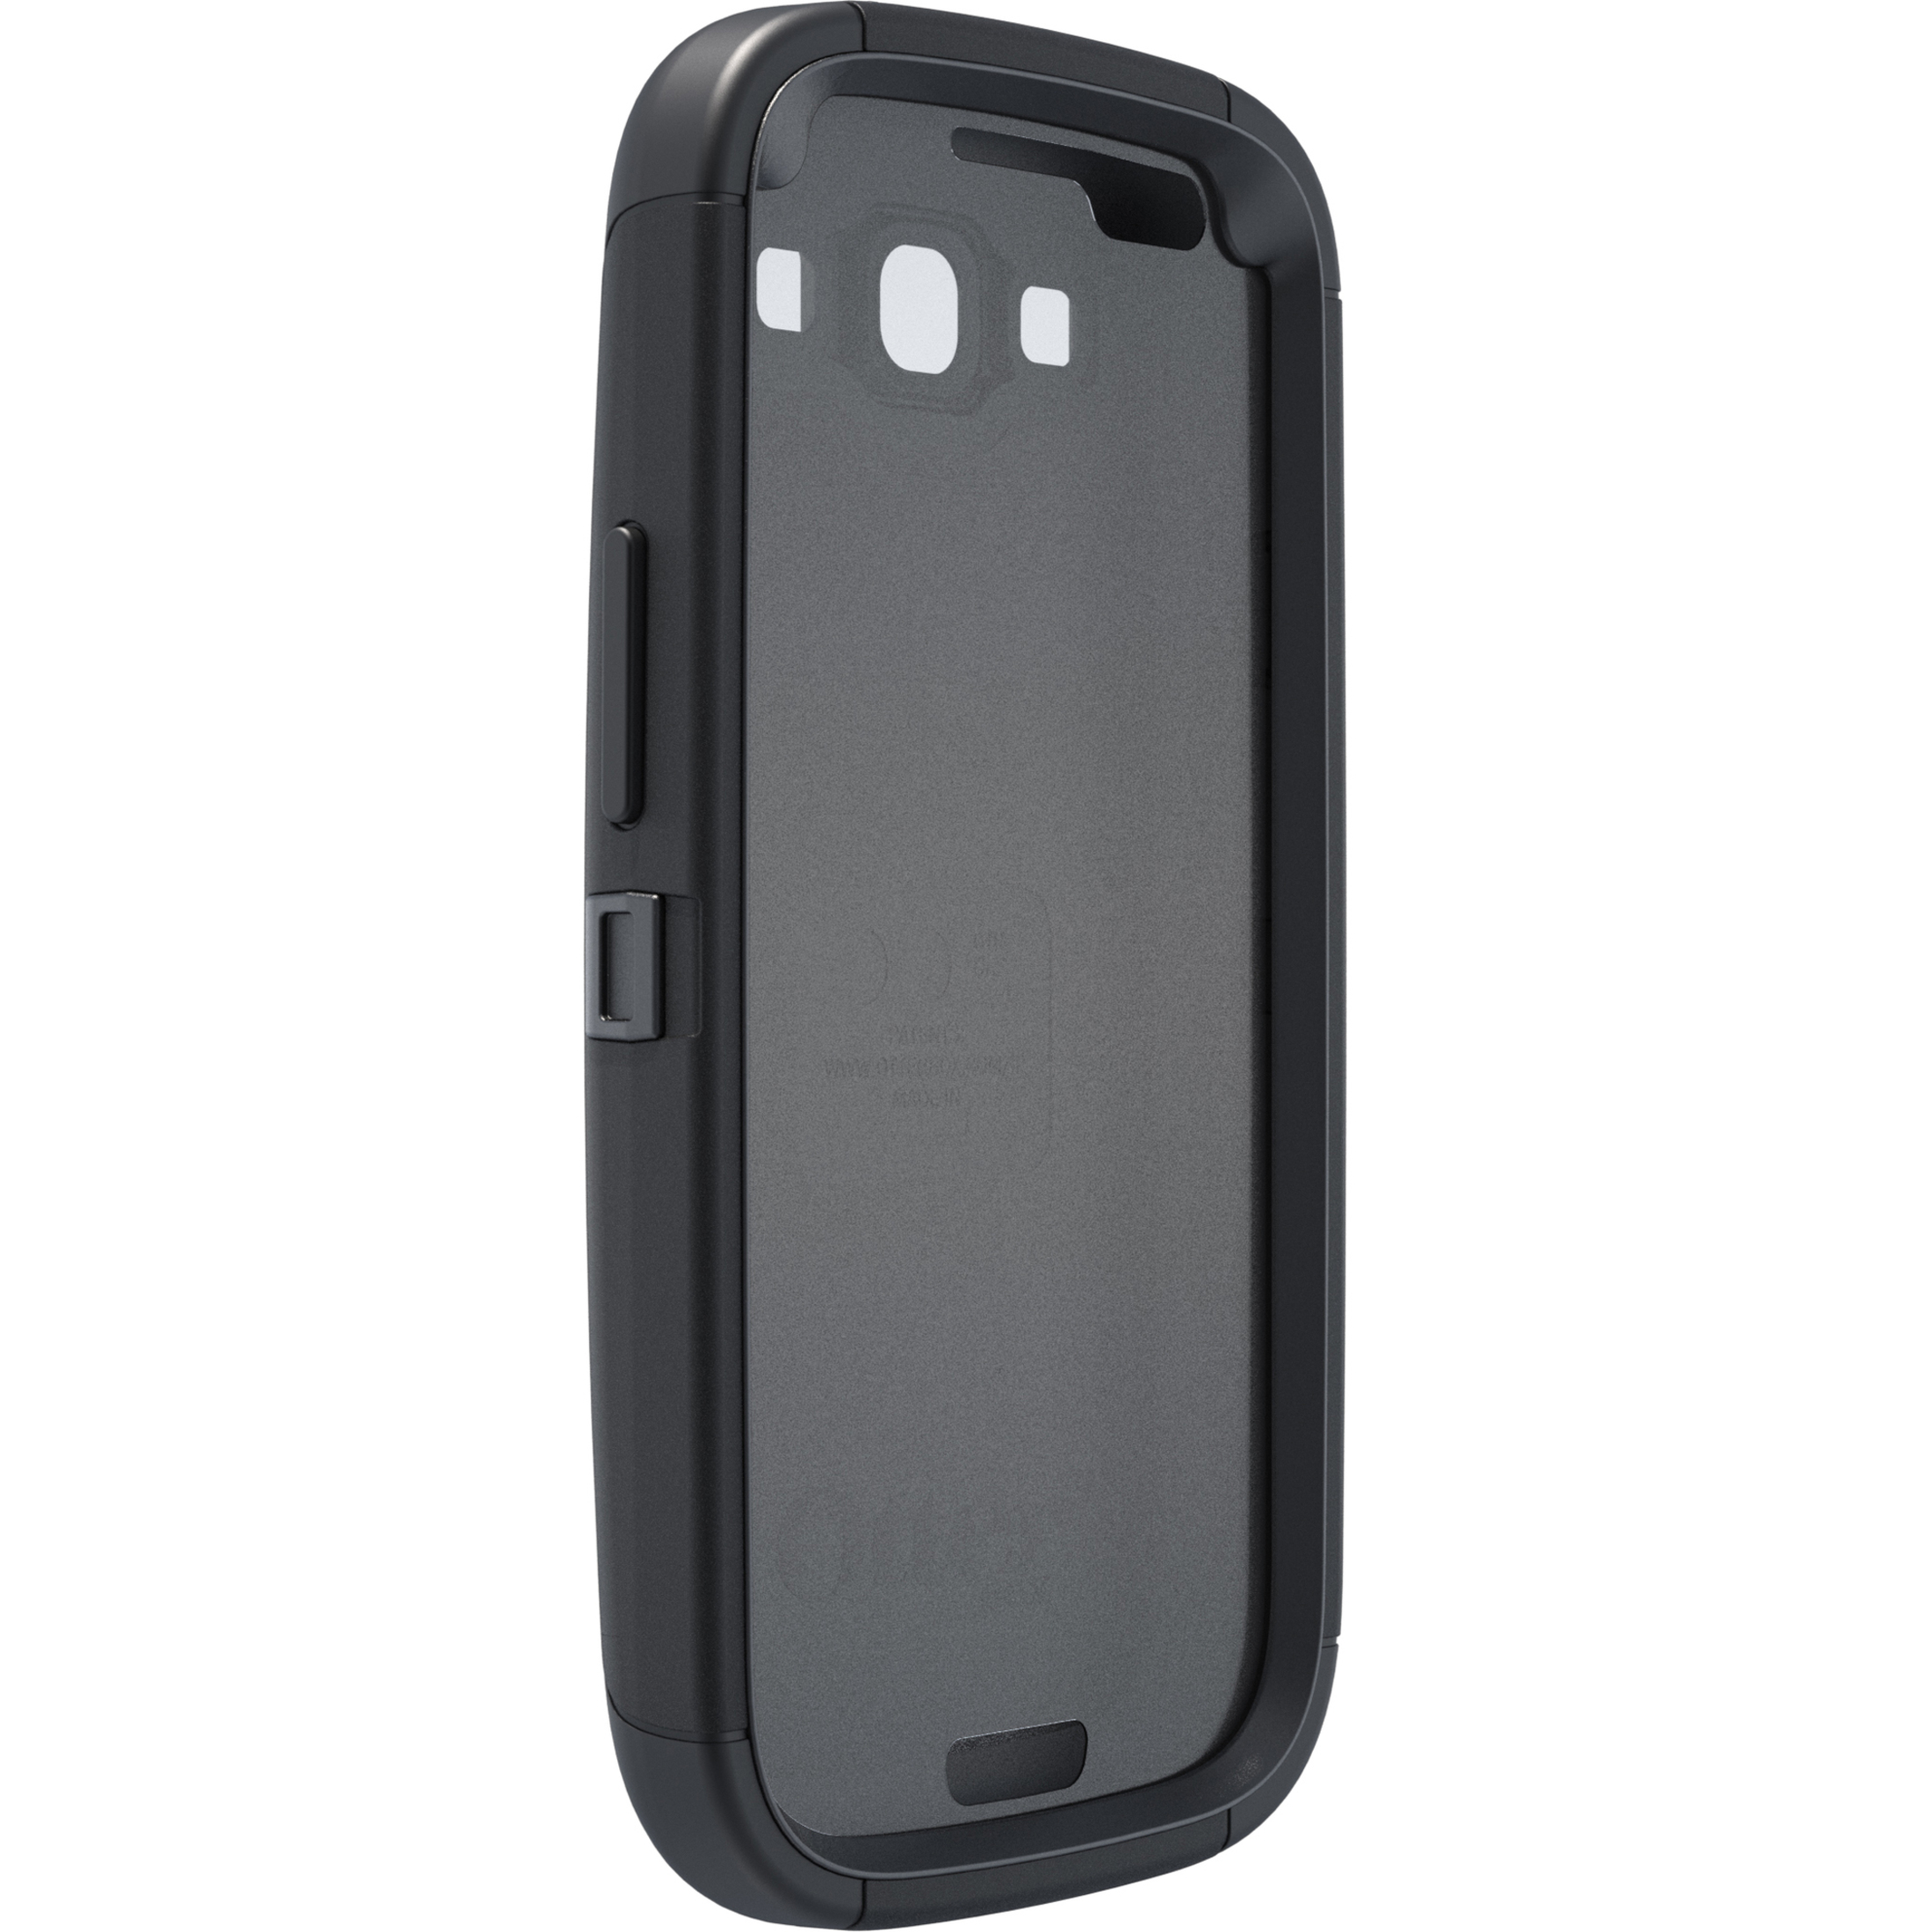 OtterBox Defender Carrying Case (Holster) Smartphone, Black - image 3 of 3